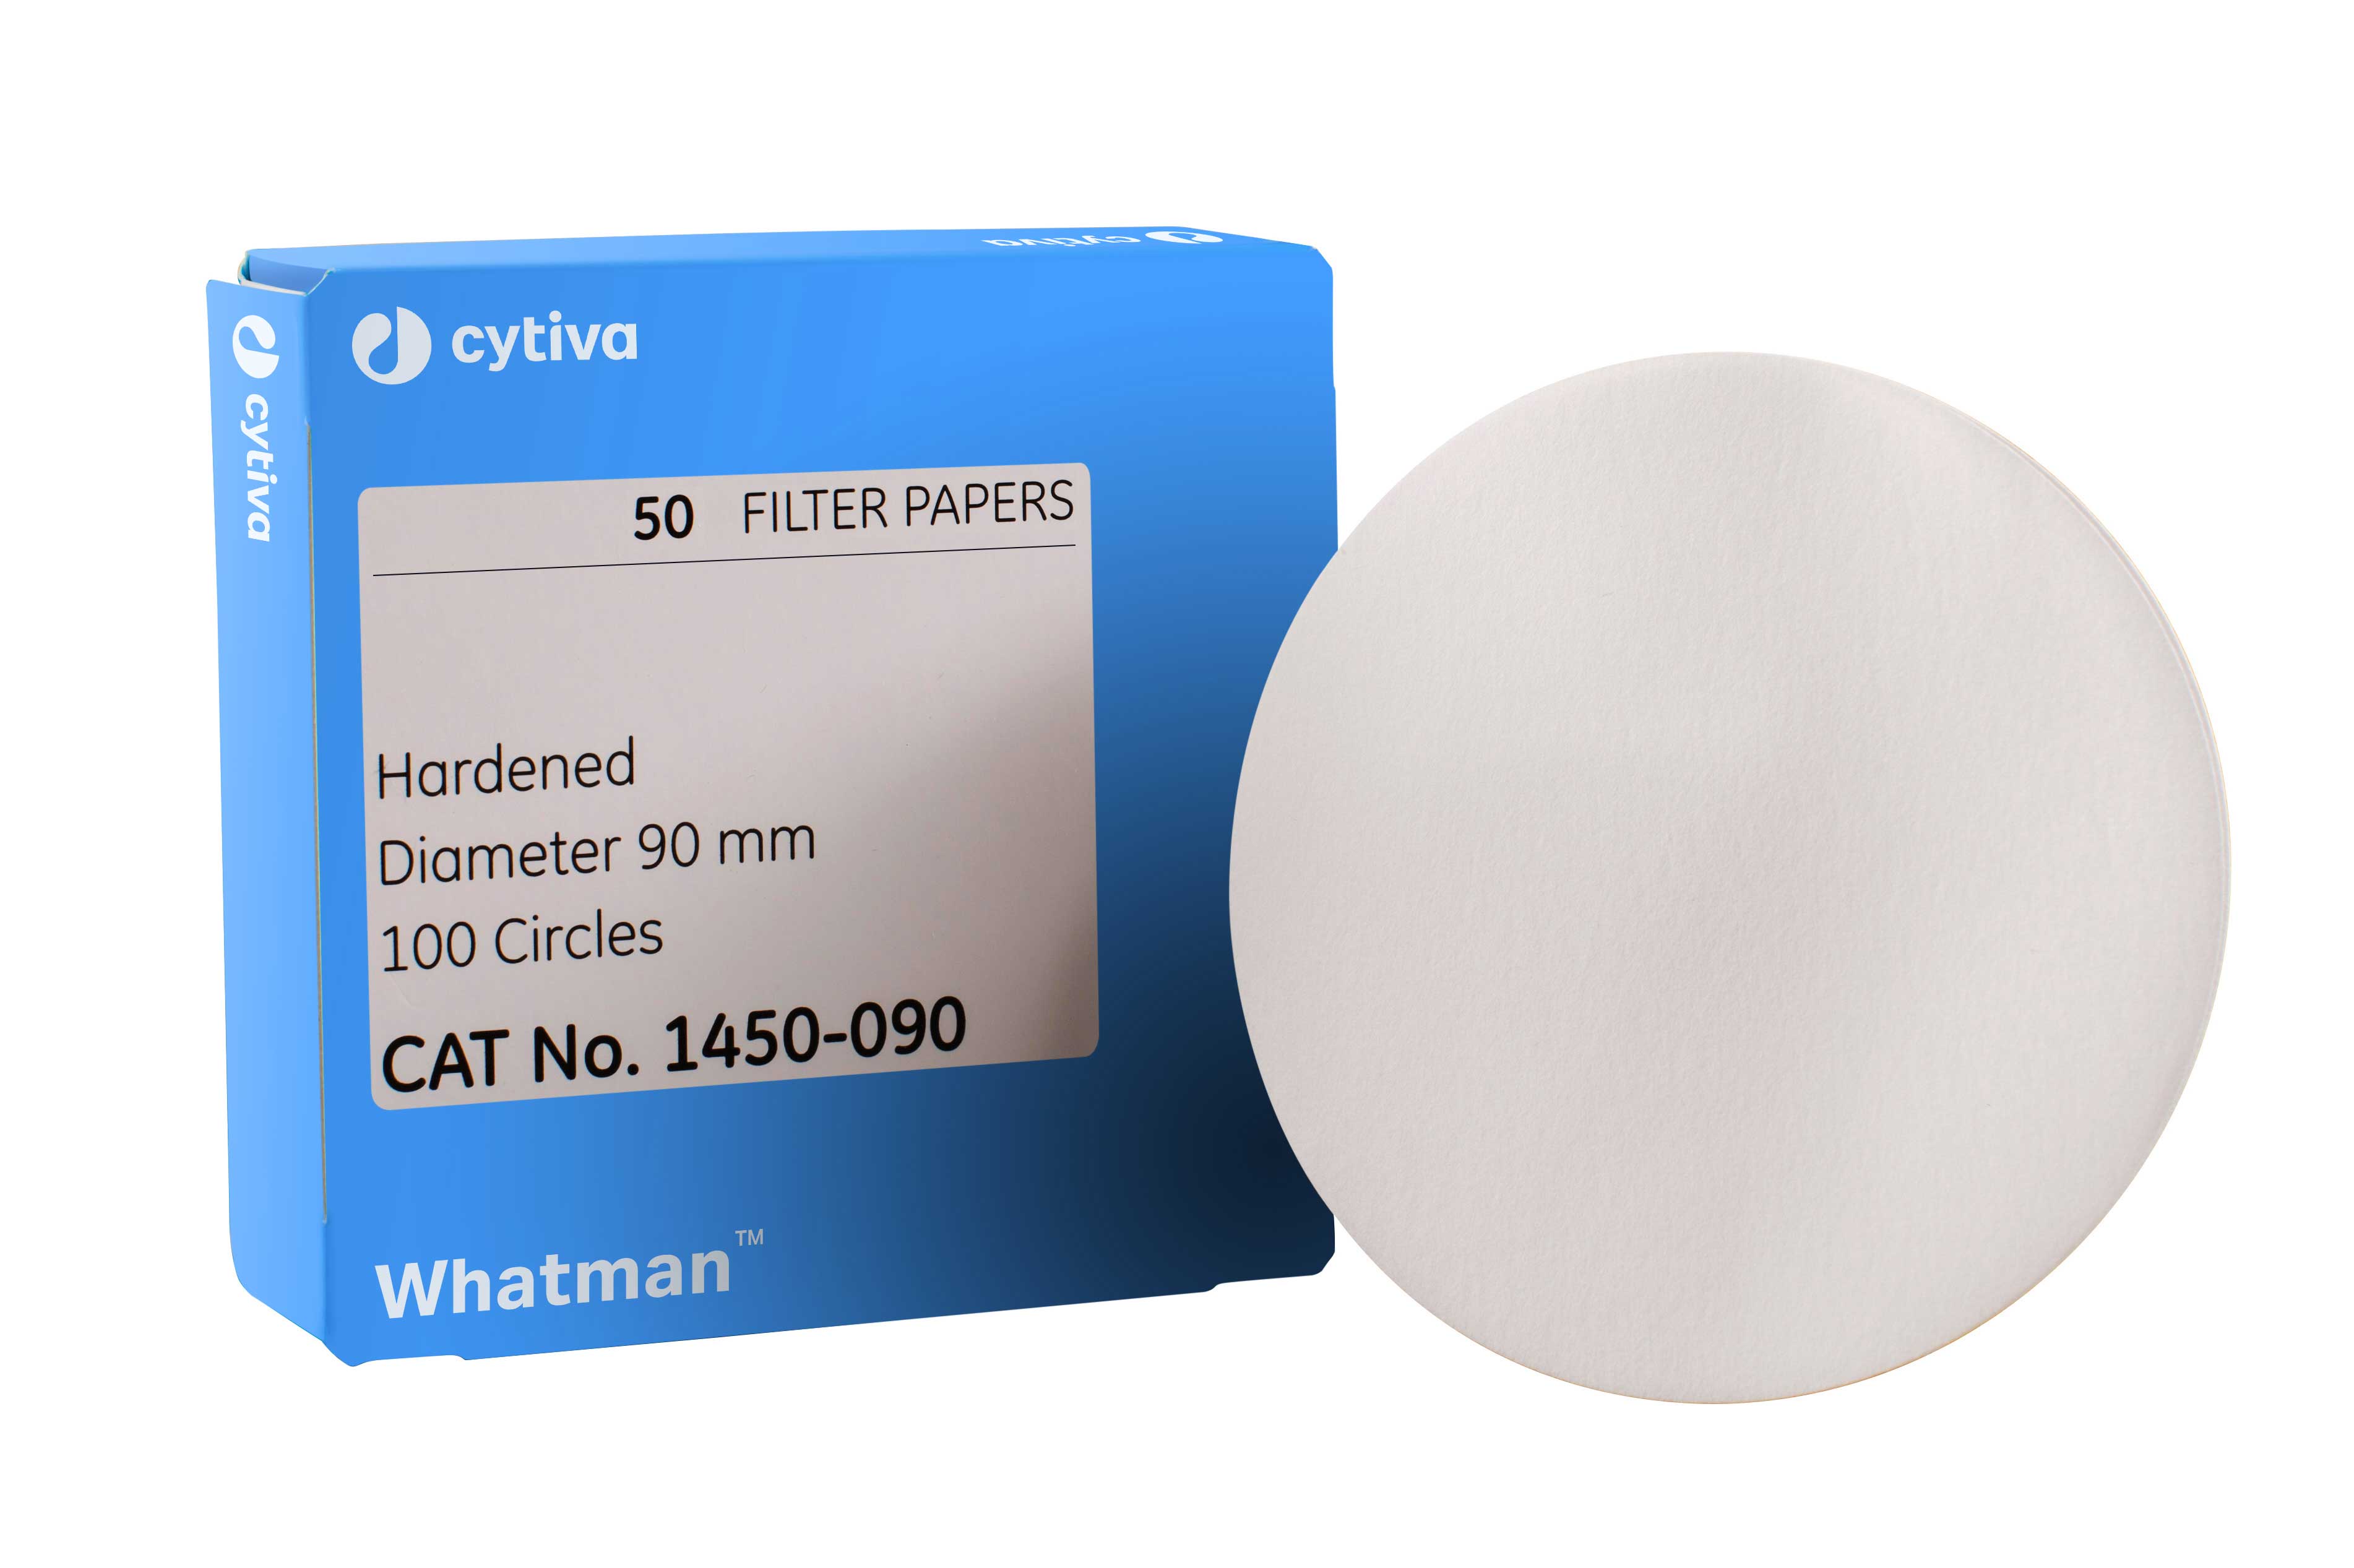 Filtro de papel de celulosa pura. Whatman™ (Cytiva). Disco Grado 50 Celulosa pura sin cenizas. Ø (mm): 150. Retención típica (µm): 2,7